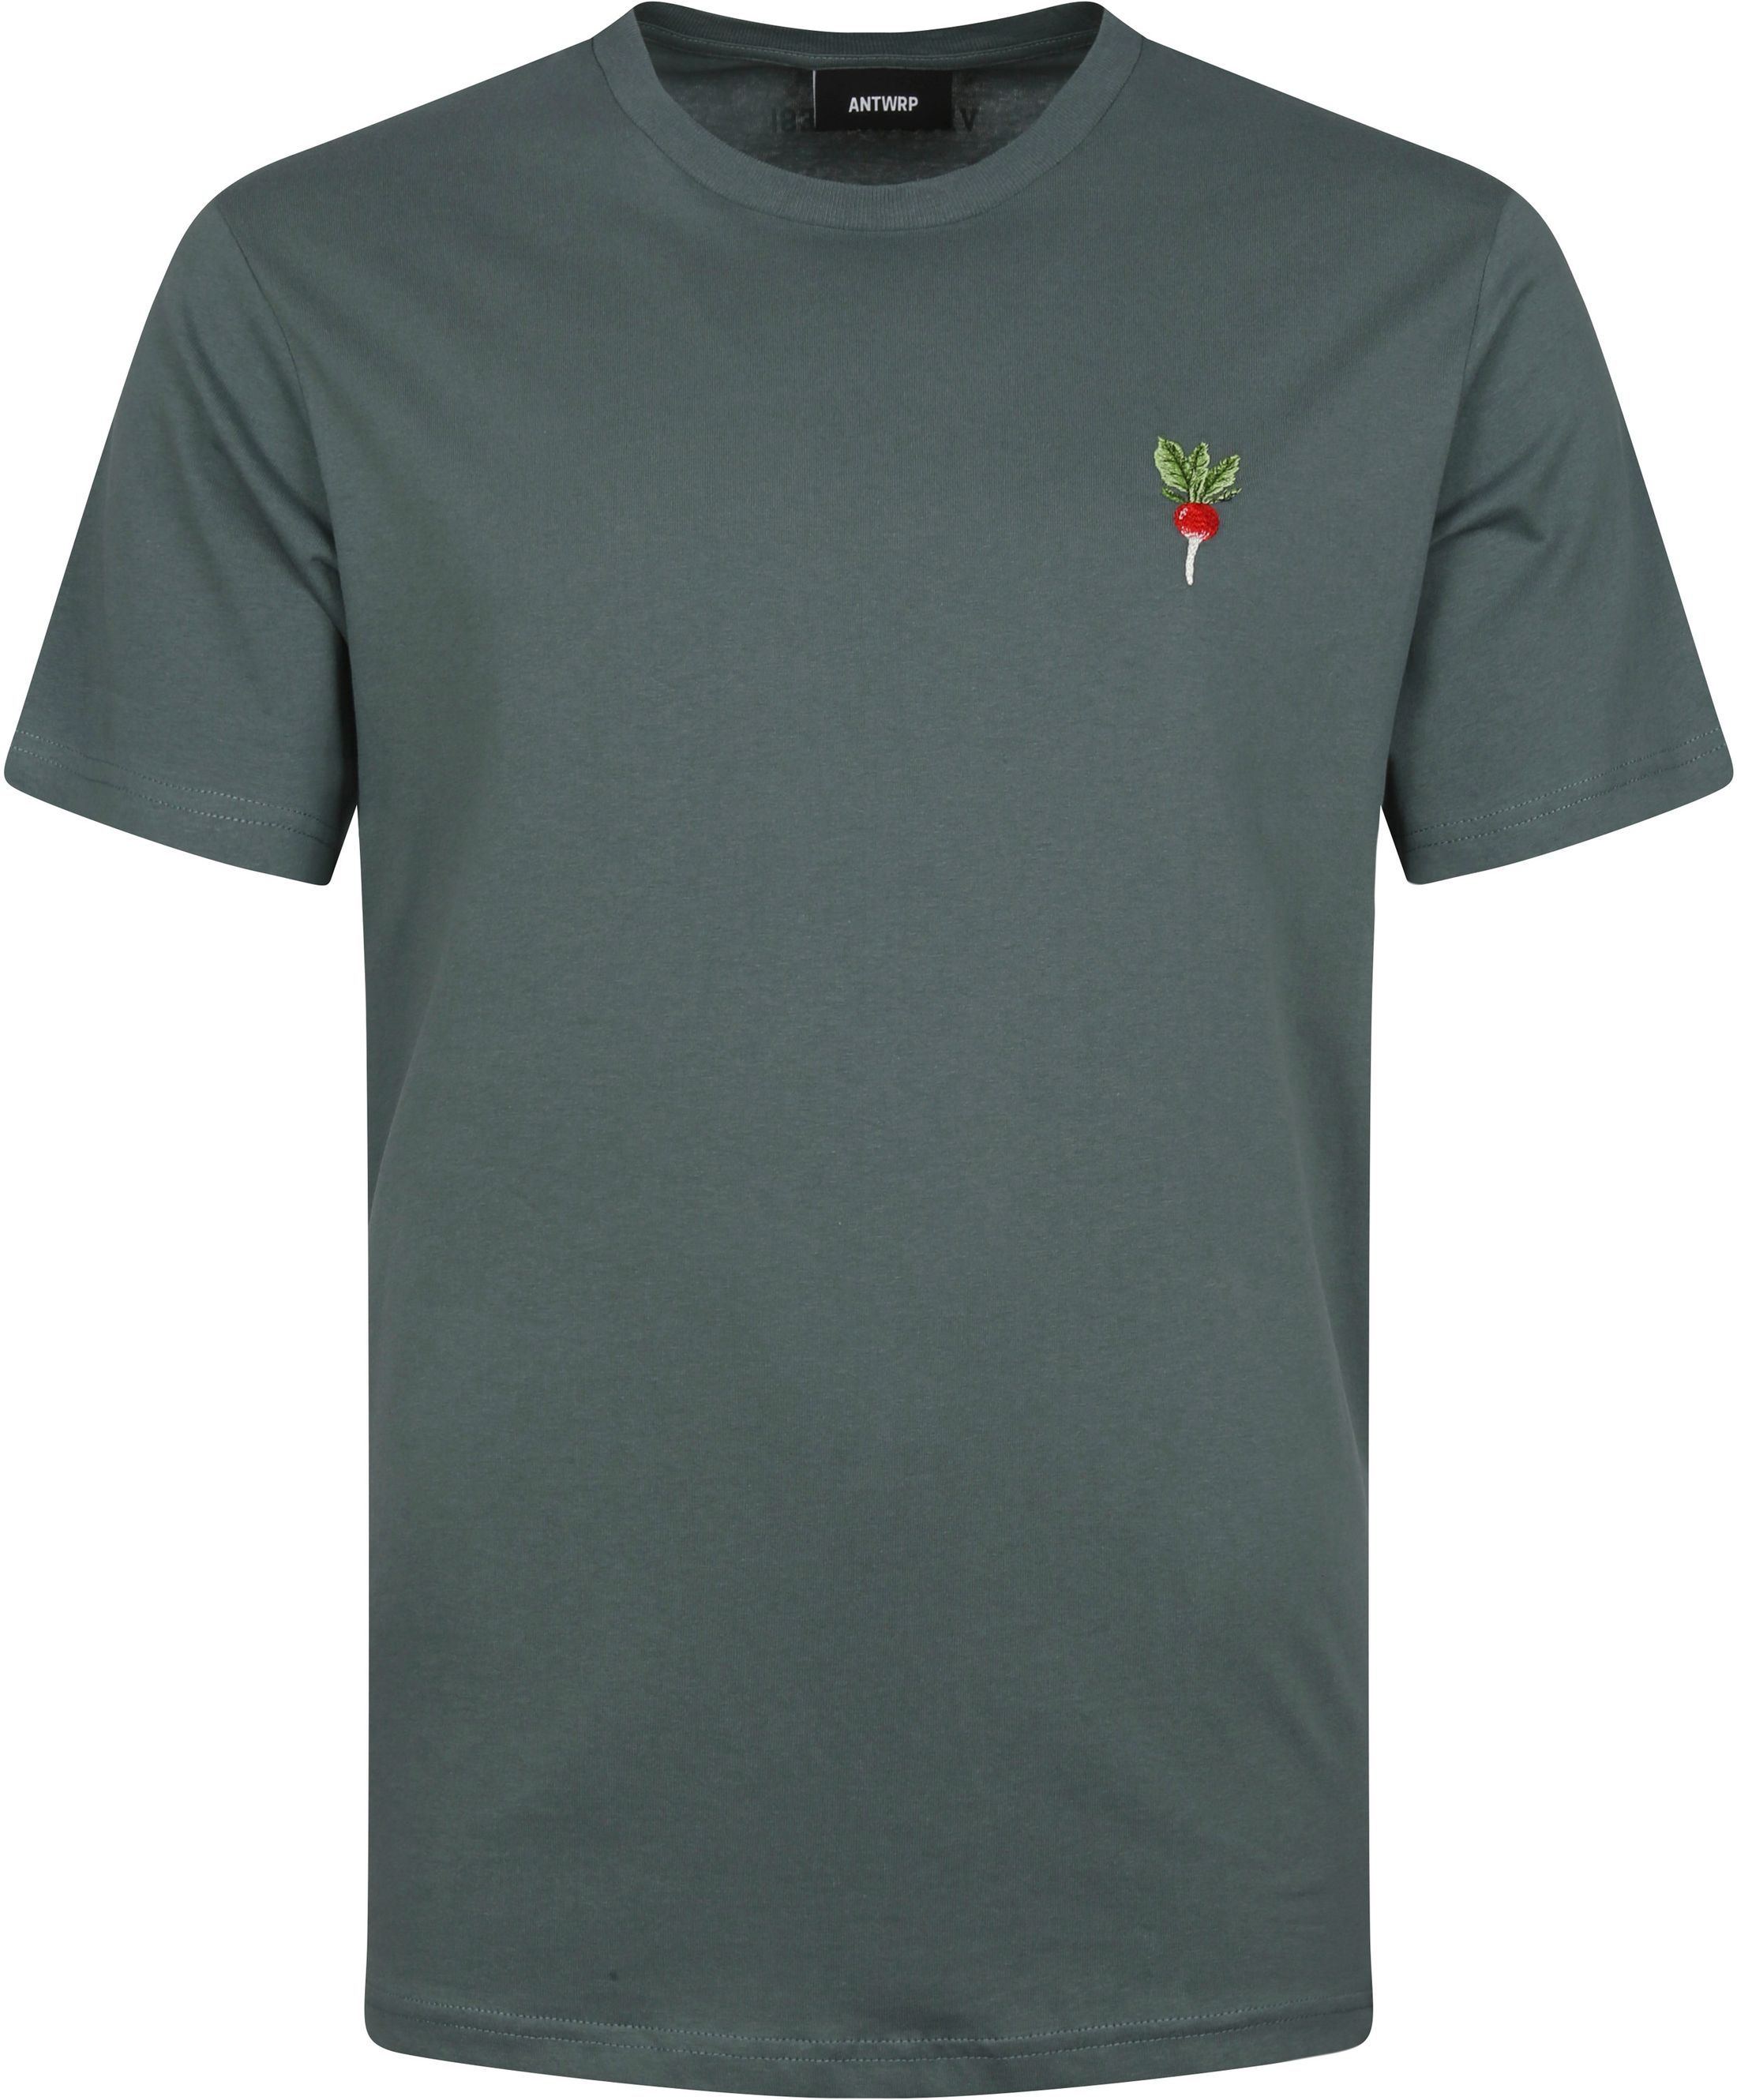 ANTWRP T-Shirt Radish Green size L